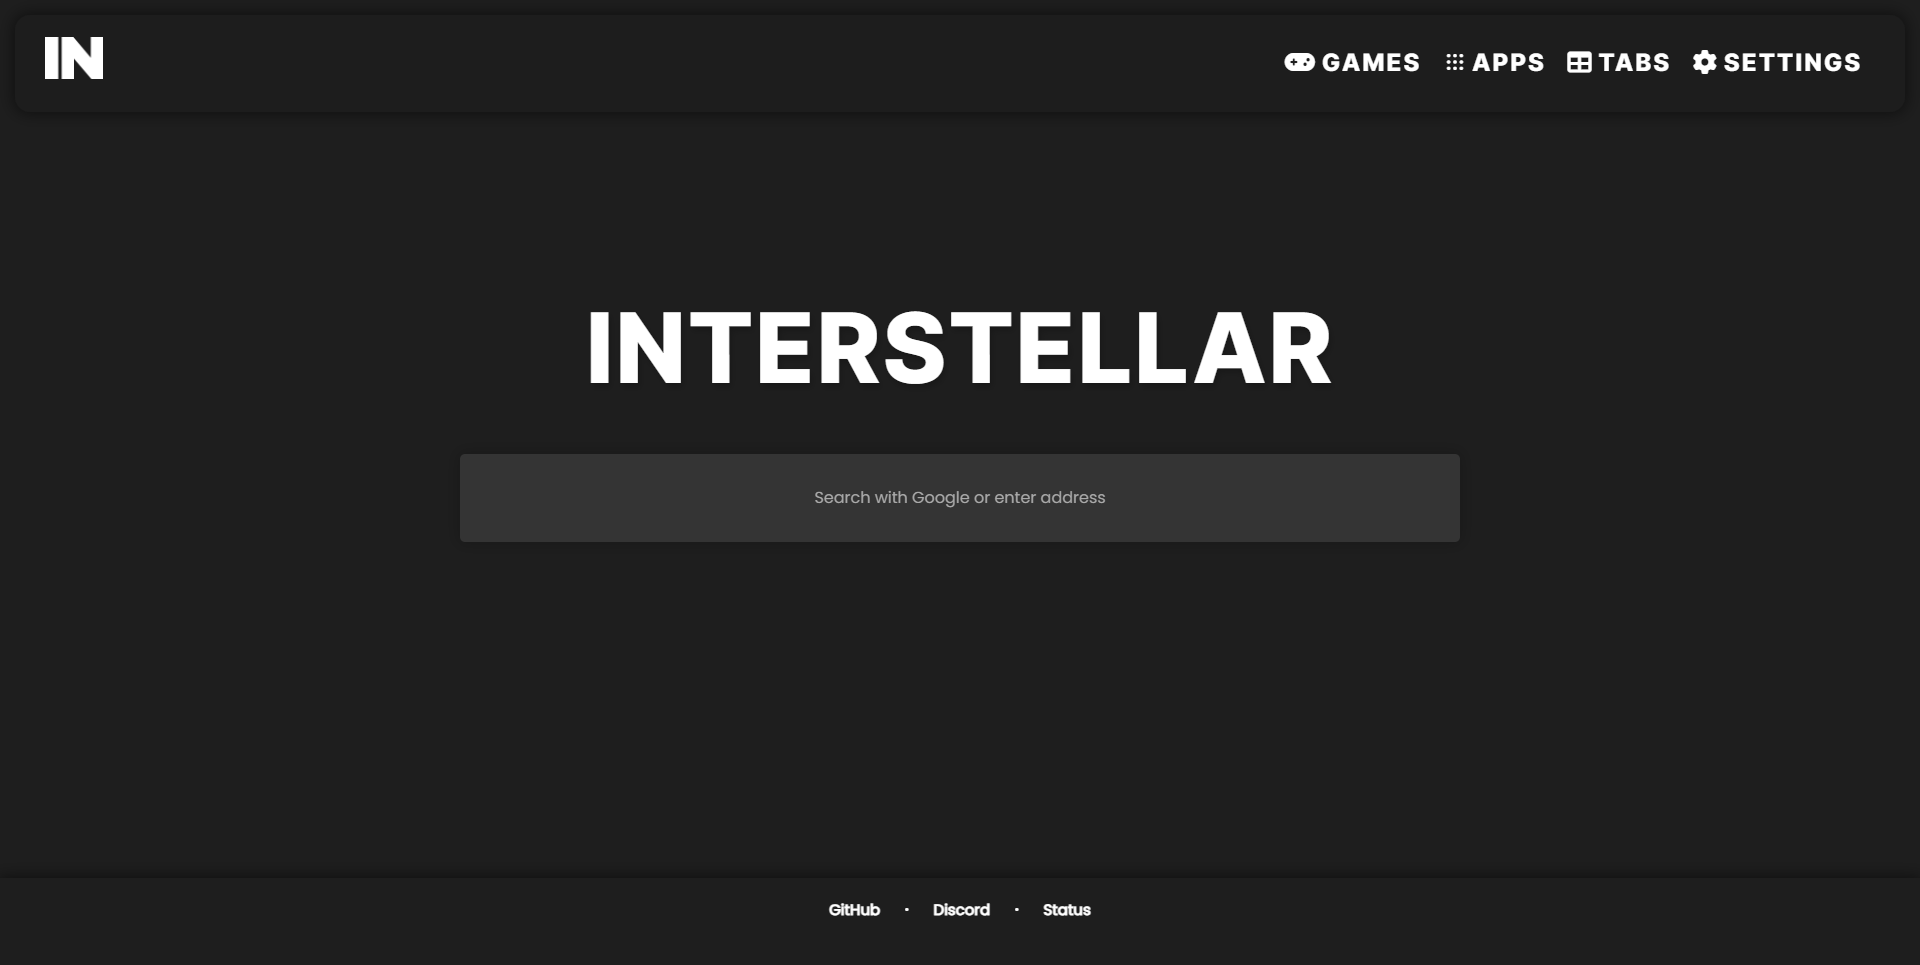 interstellar's content image.